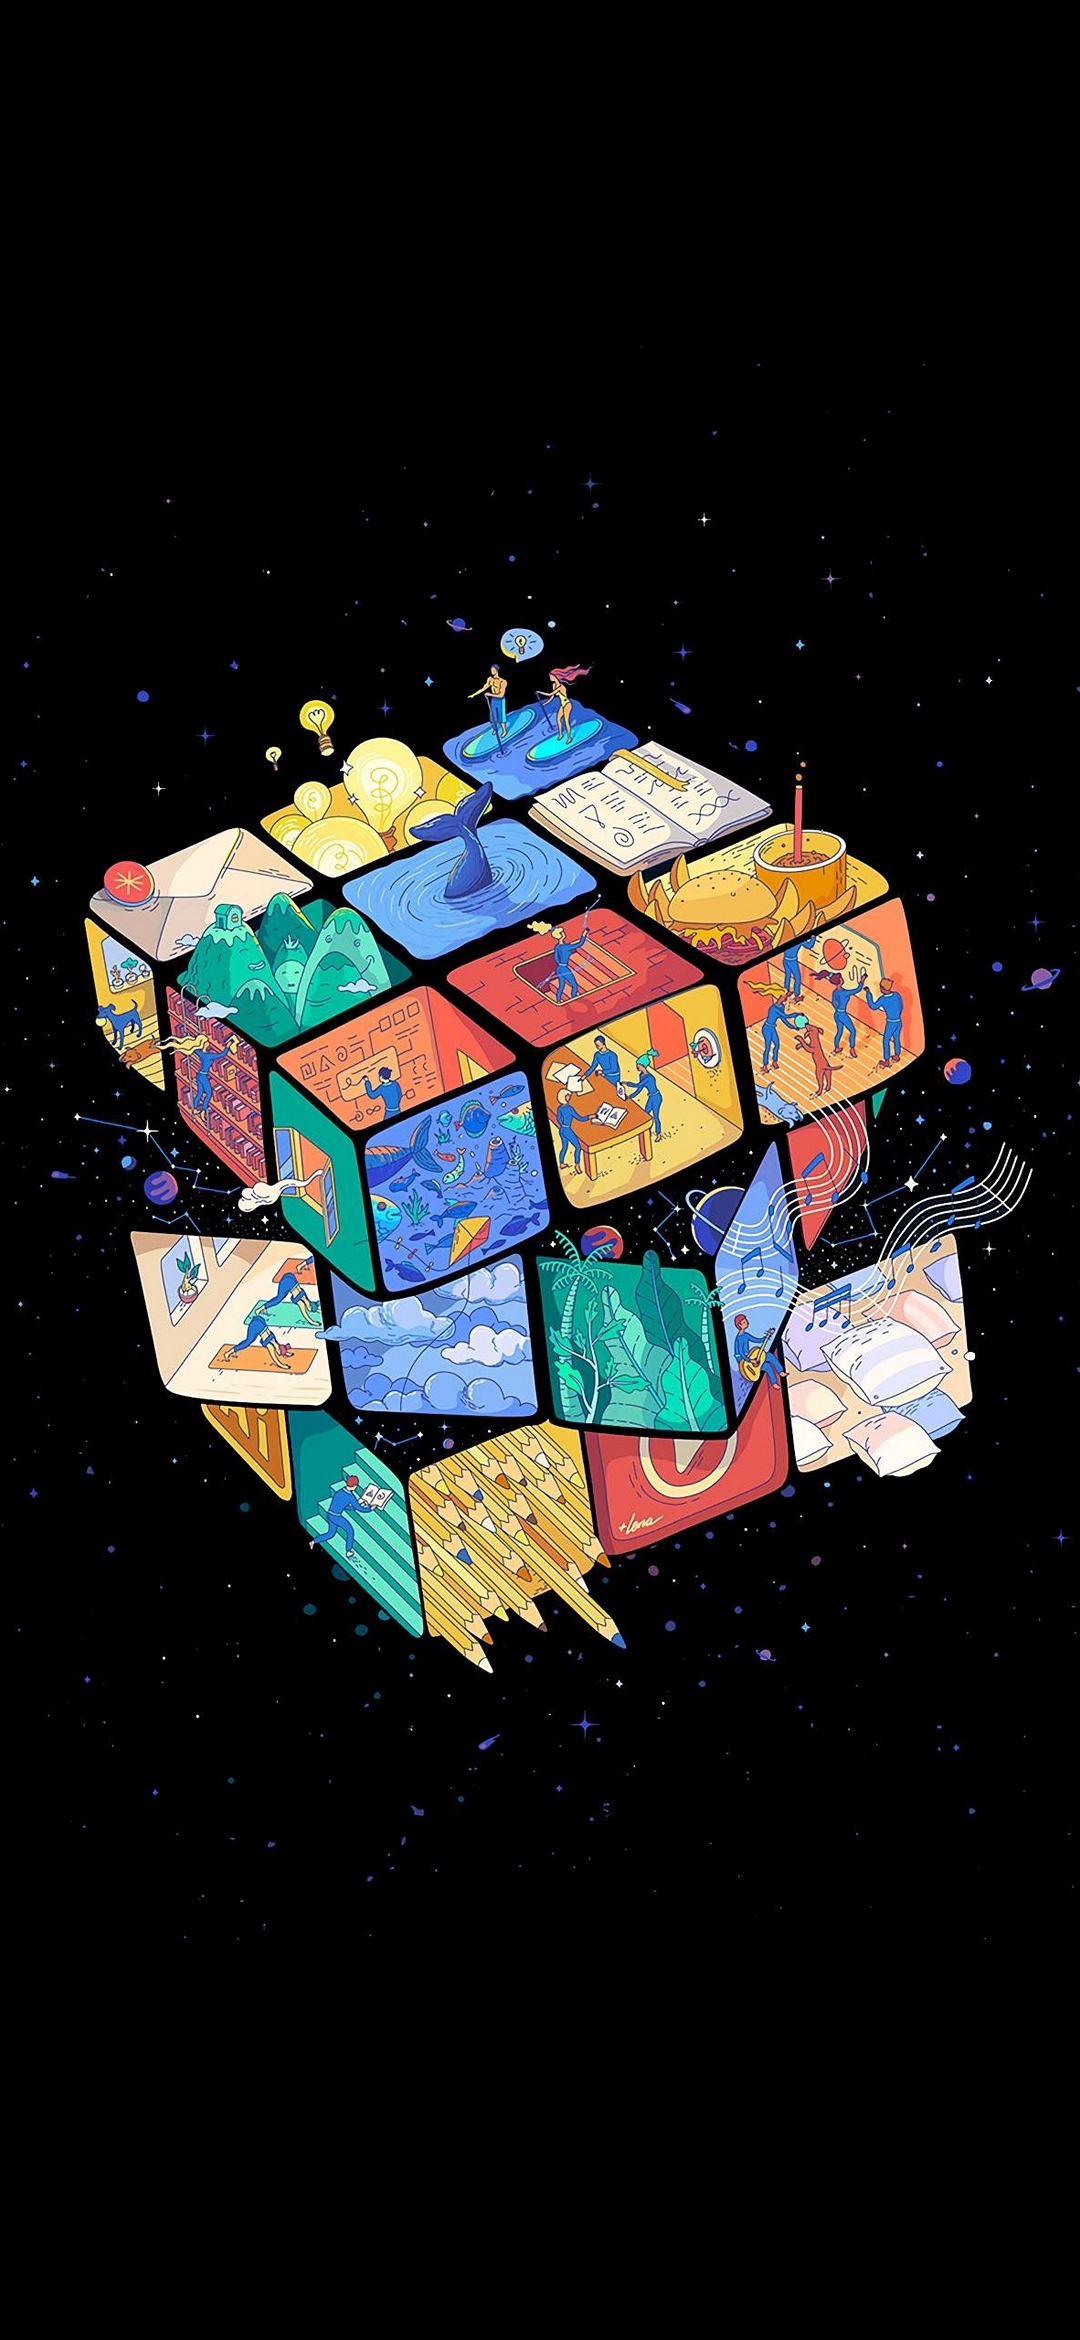 Rubik's cube of life illustration